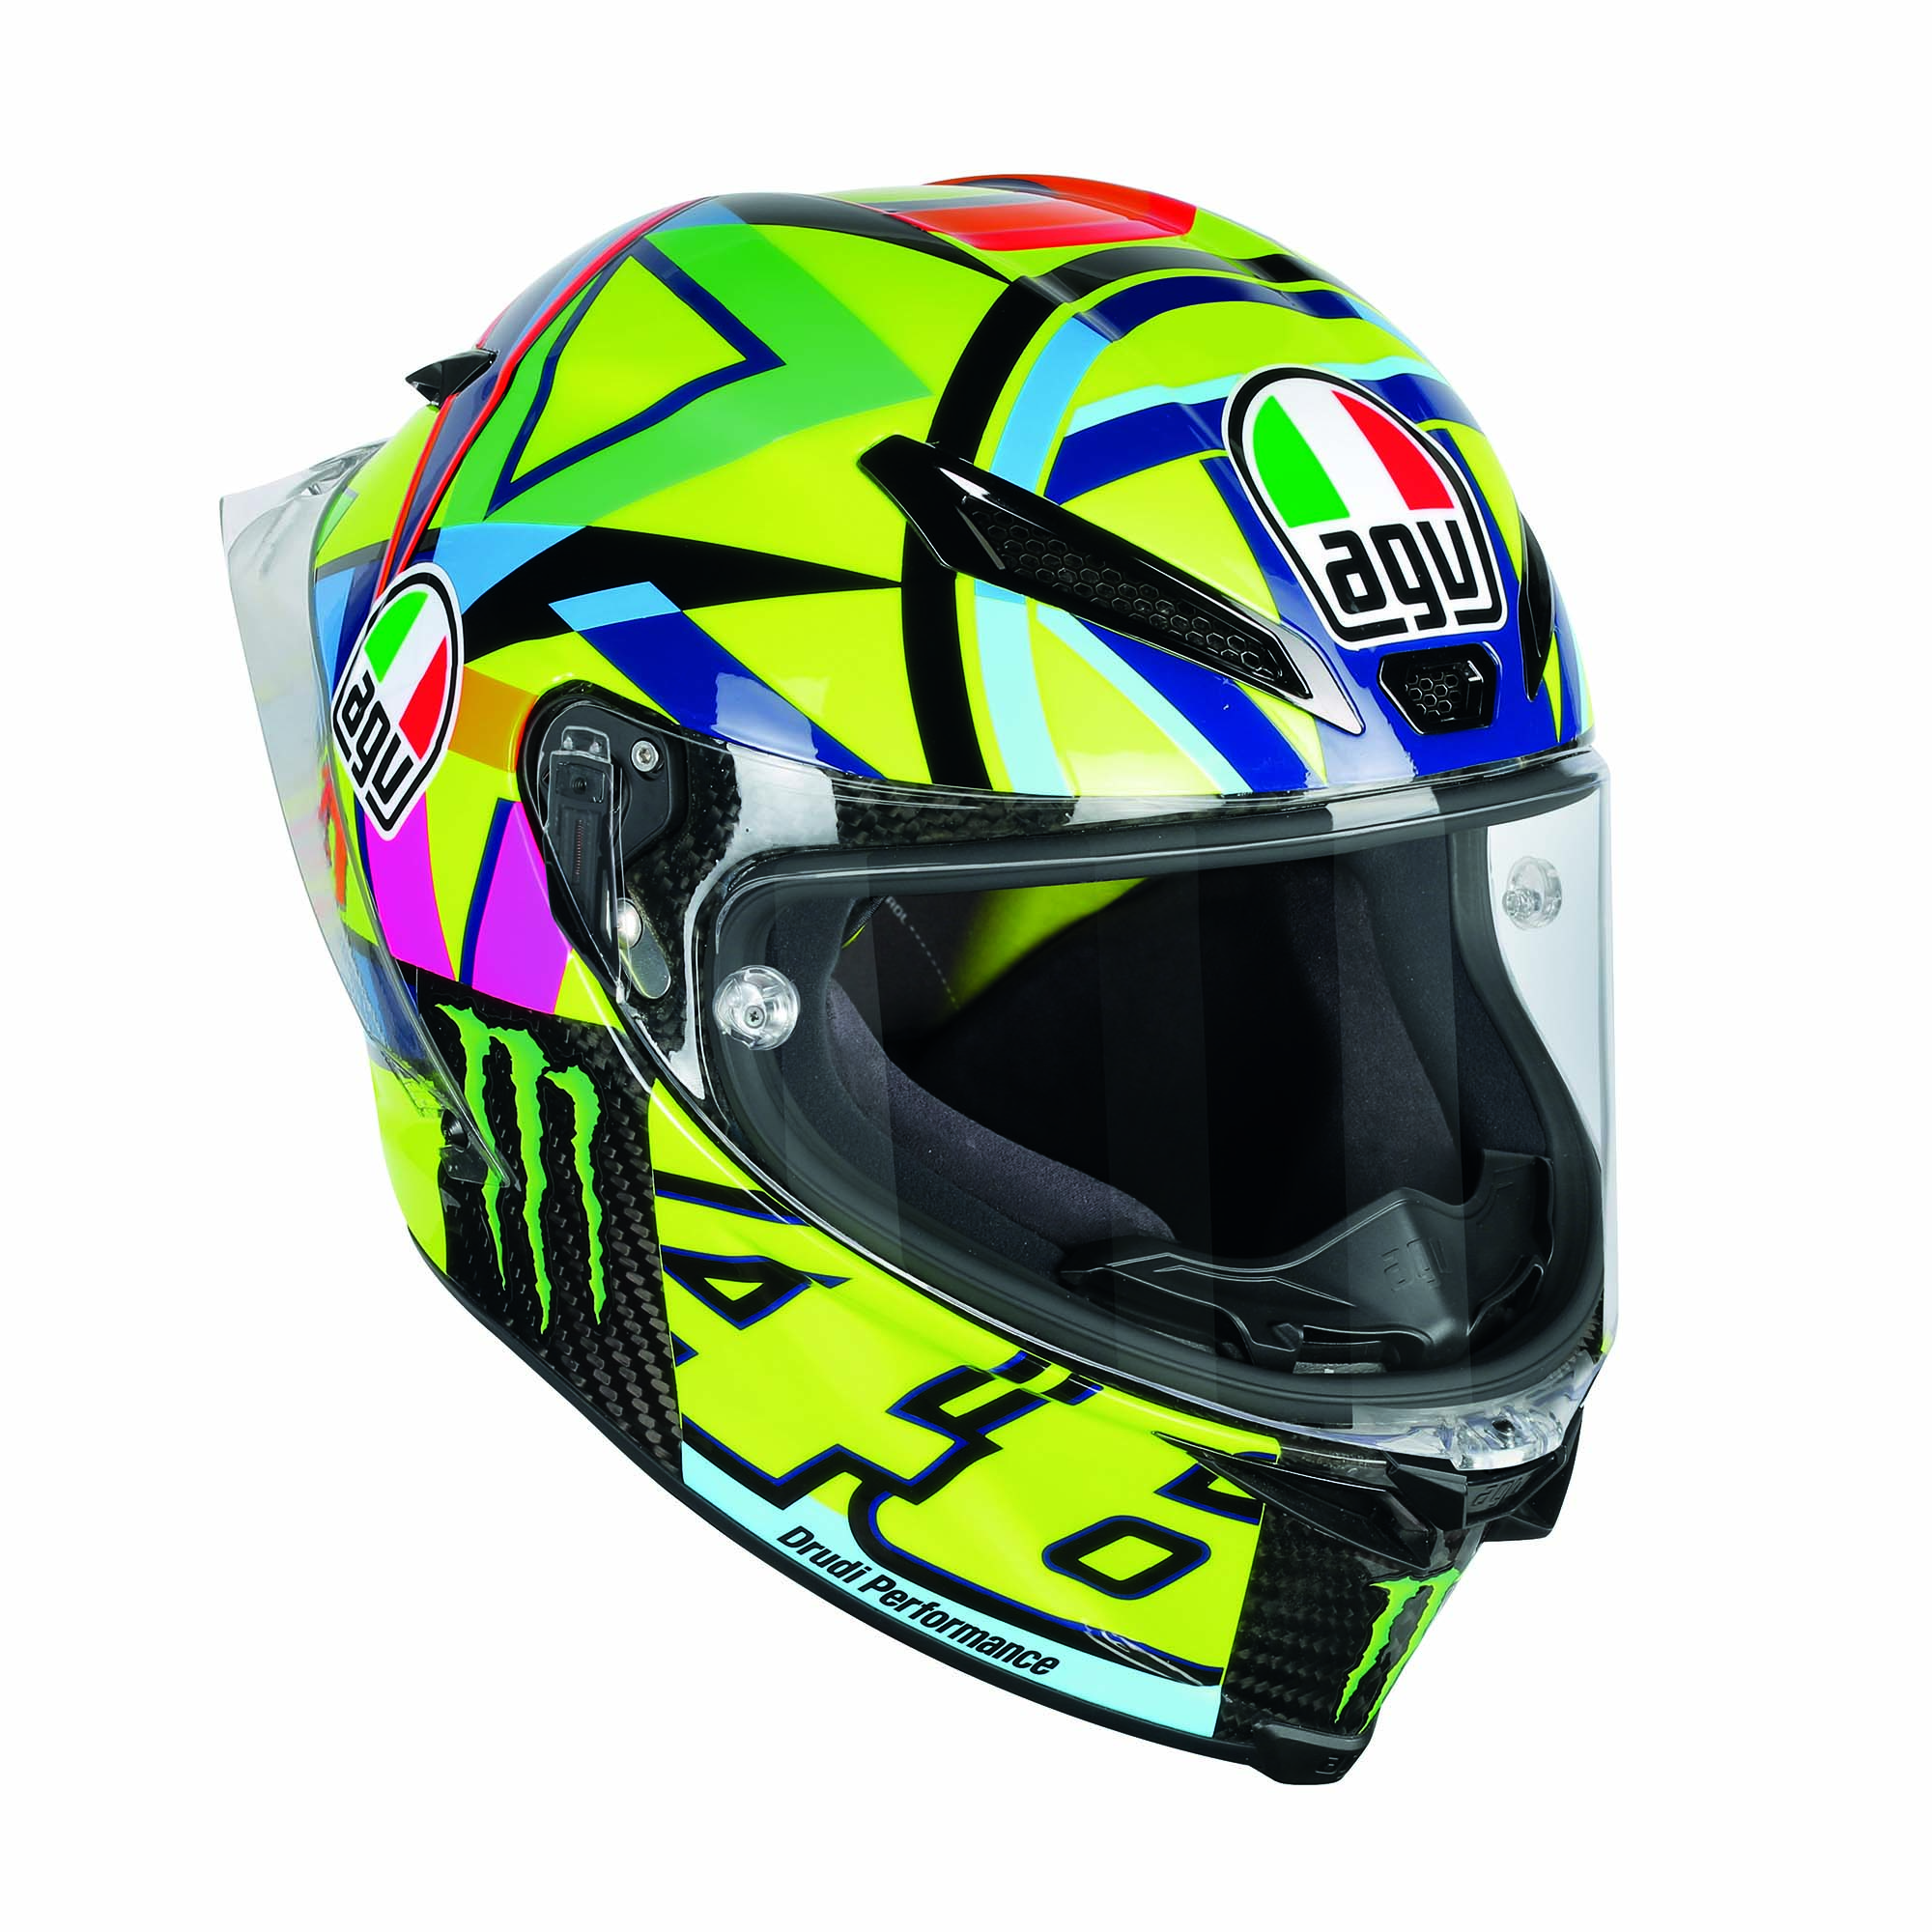 Gear Review: The AGV Pista GP R Helmet | The Drive